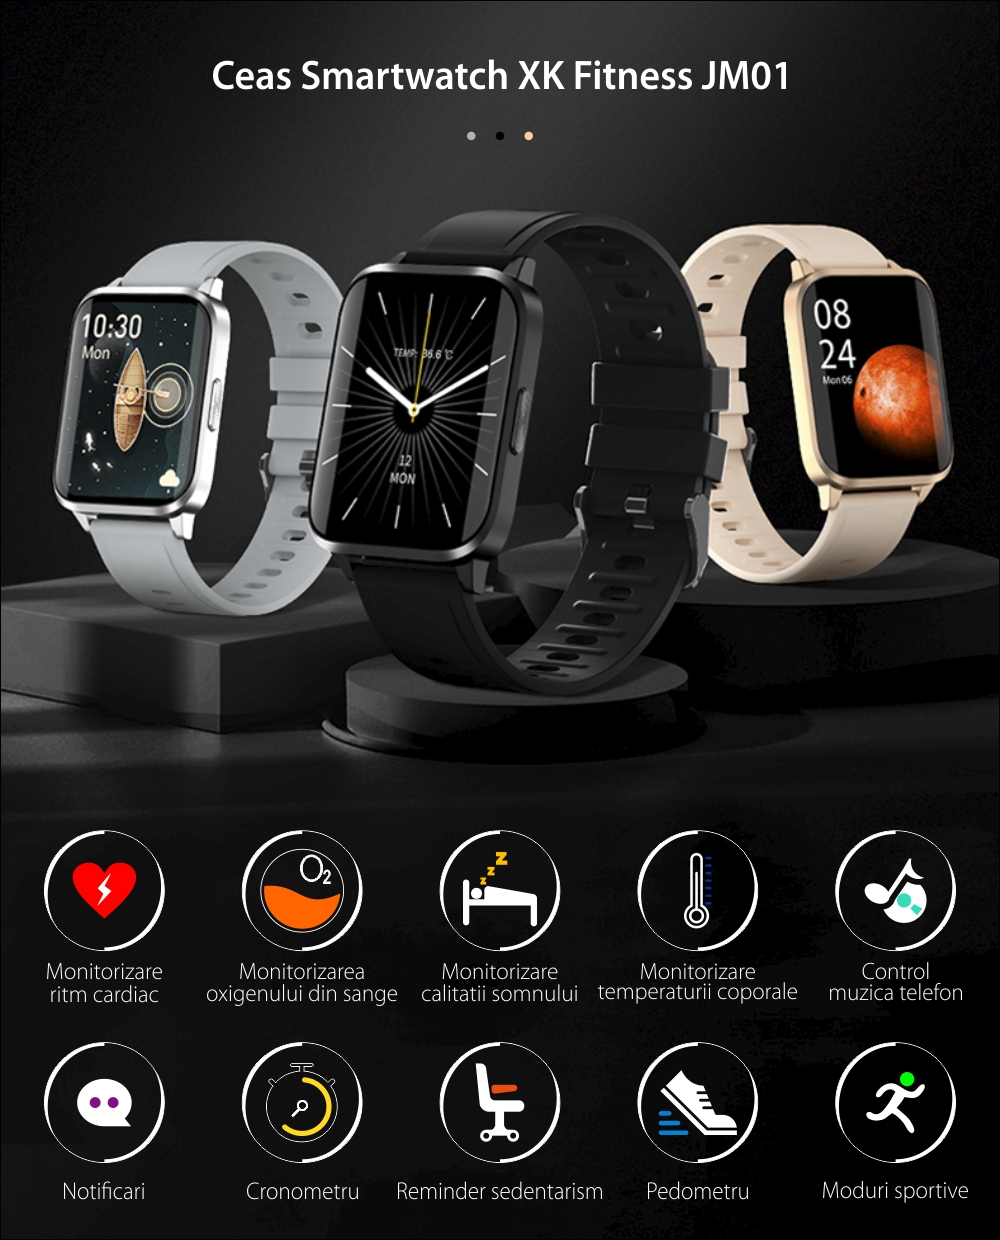 Ceas Smartwatch XK Fitness JM01 cu Functie masurare temperatura corporala, Monitorizare sanatate, Pedometru, Distanta, Calorii, Bratara metalica, Negru